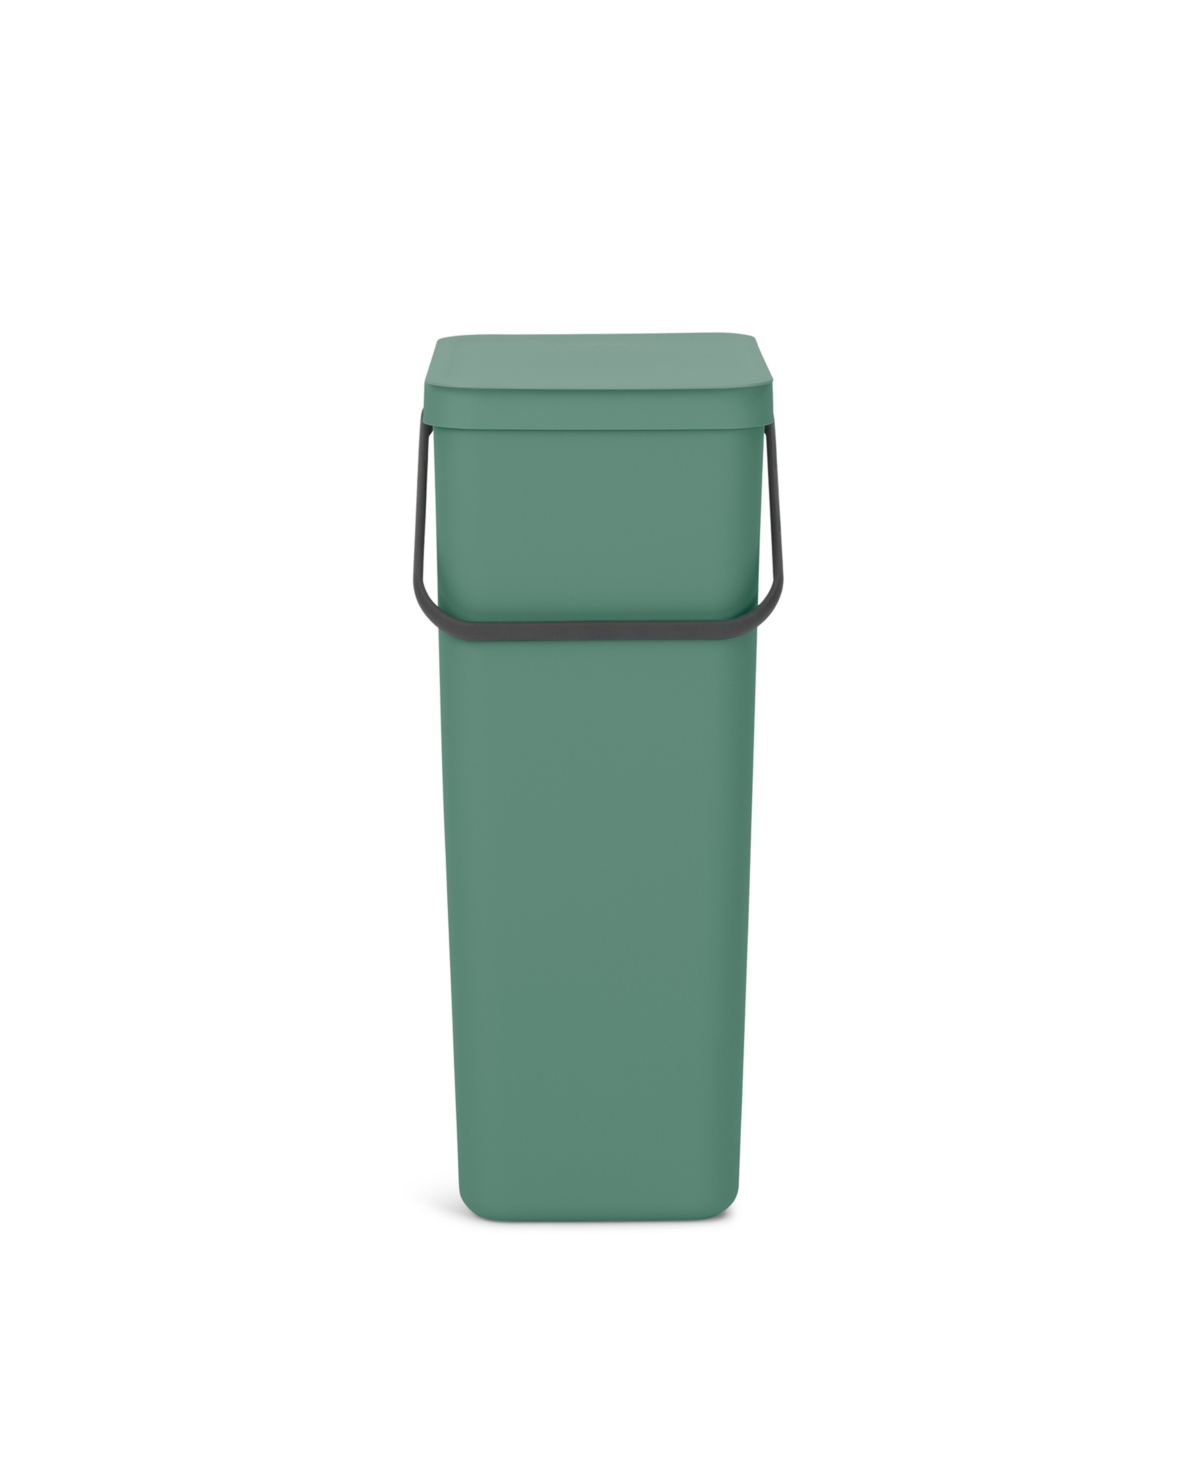 Brabantia Sort Go Plastic Bin, 10.6 Gallon, 40 Liter In Fir Green